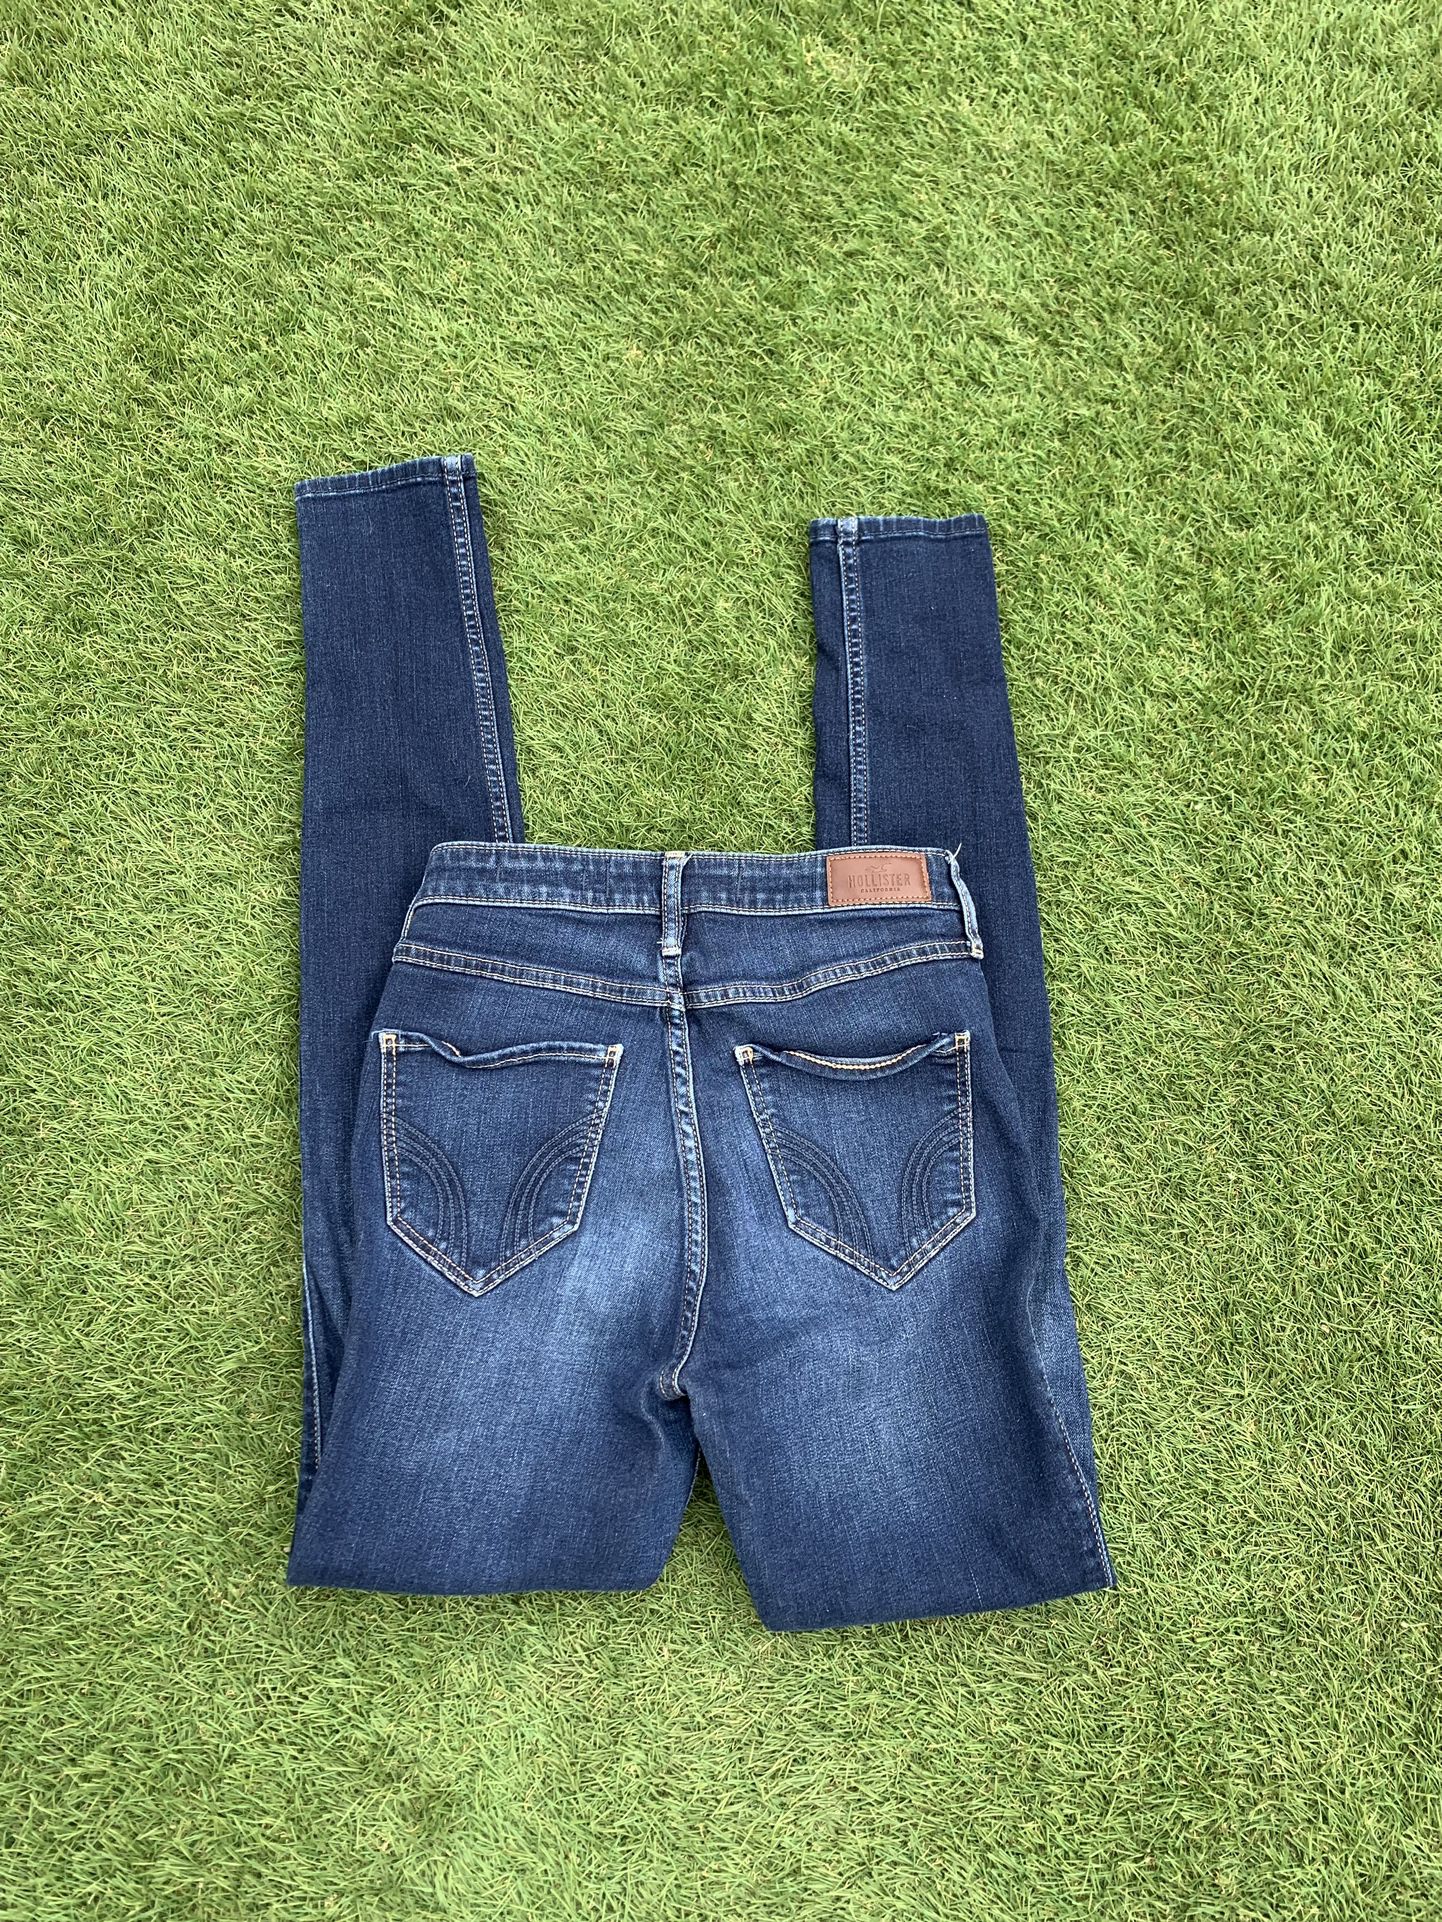 Hollister Jeans Size 1/25